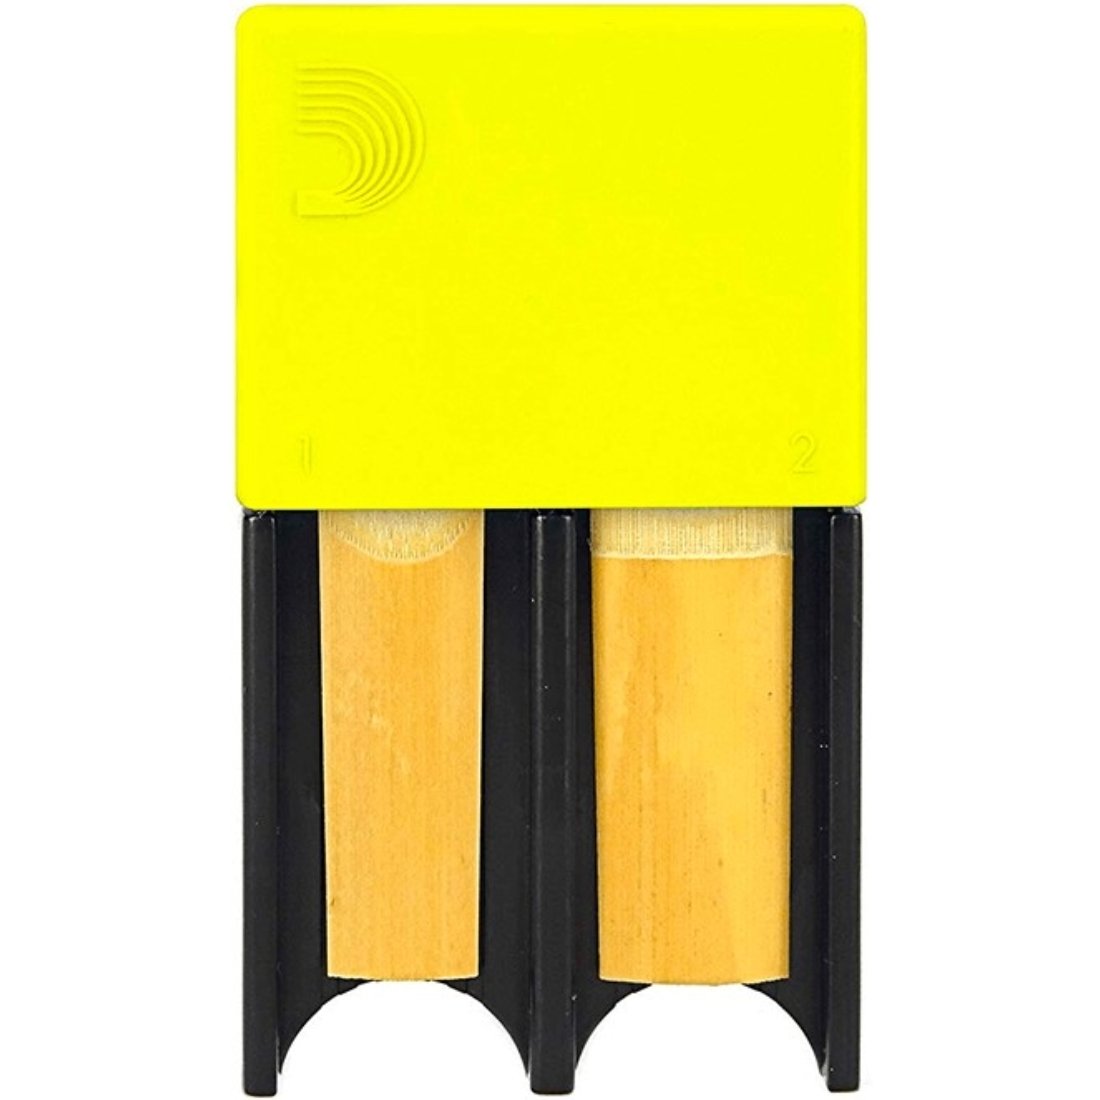 Black and yellow D'addario reed guard